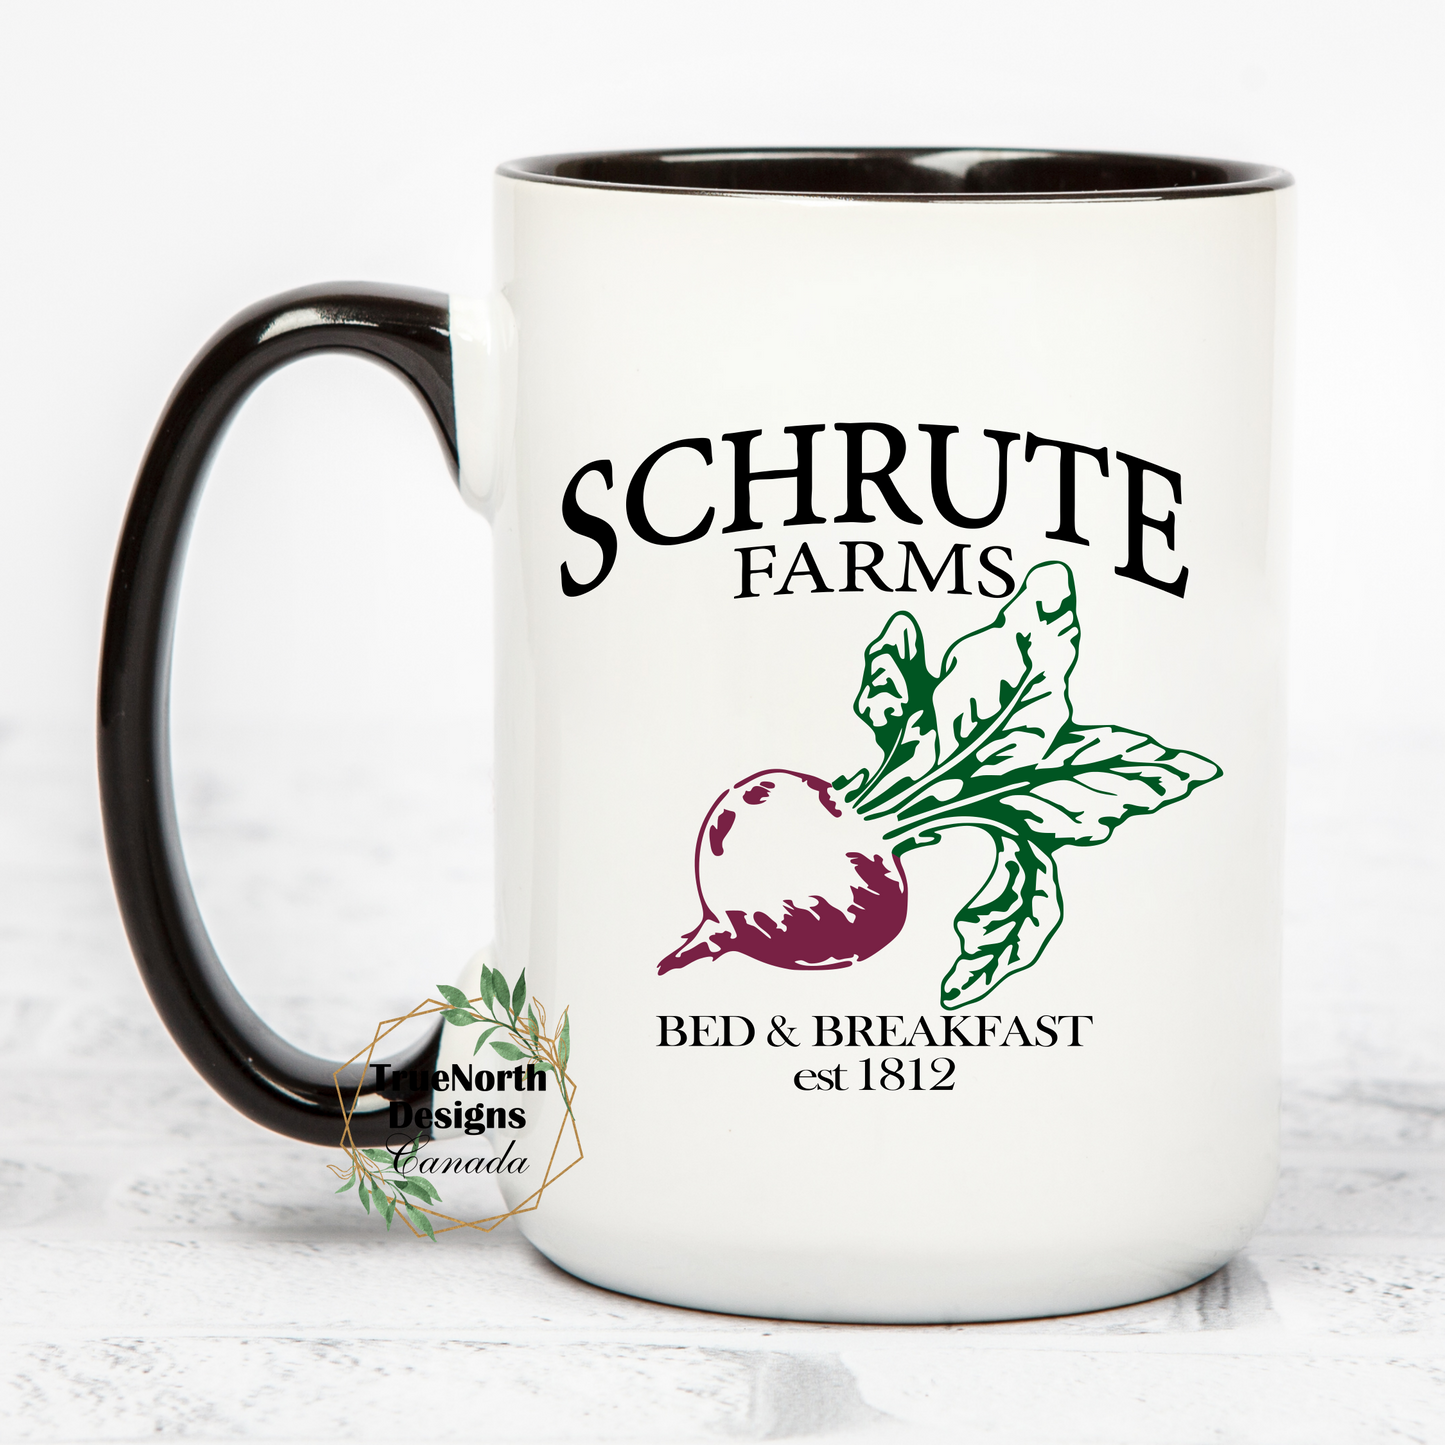 Schrute Farms Bed & Breakfast Mug